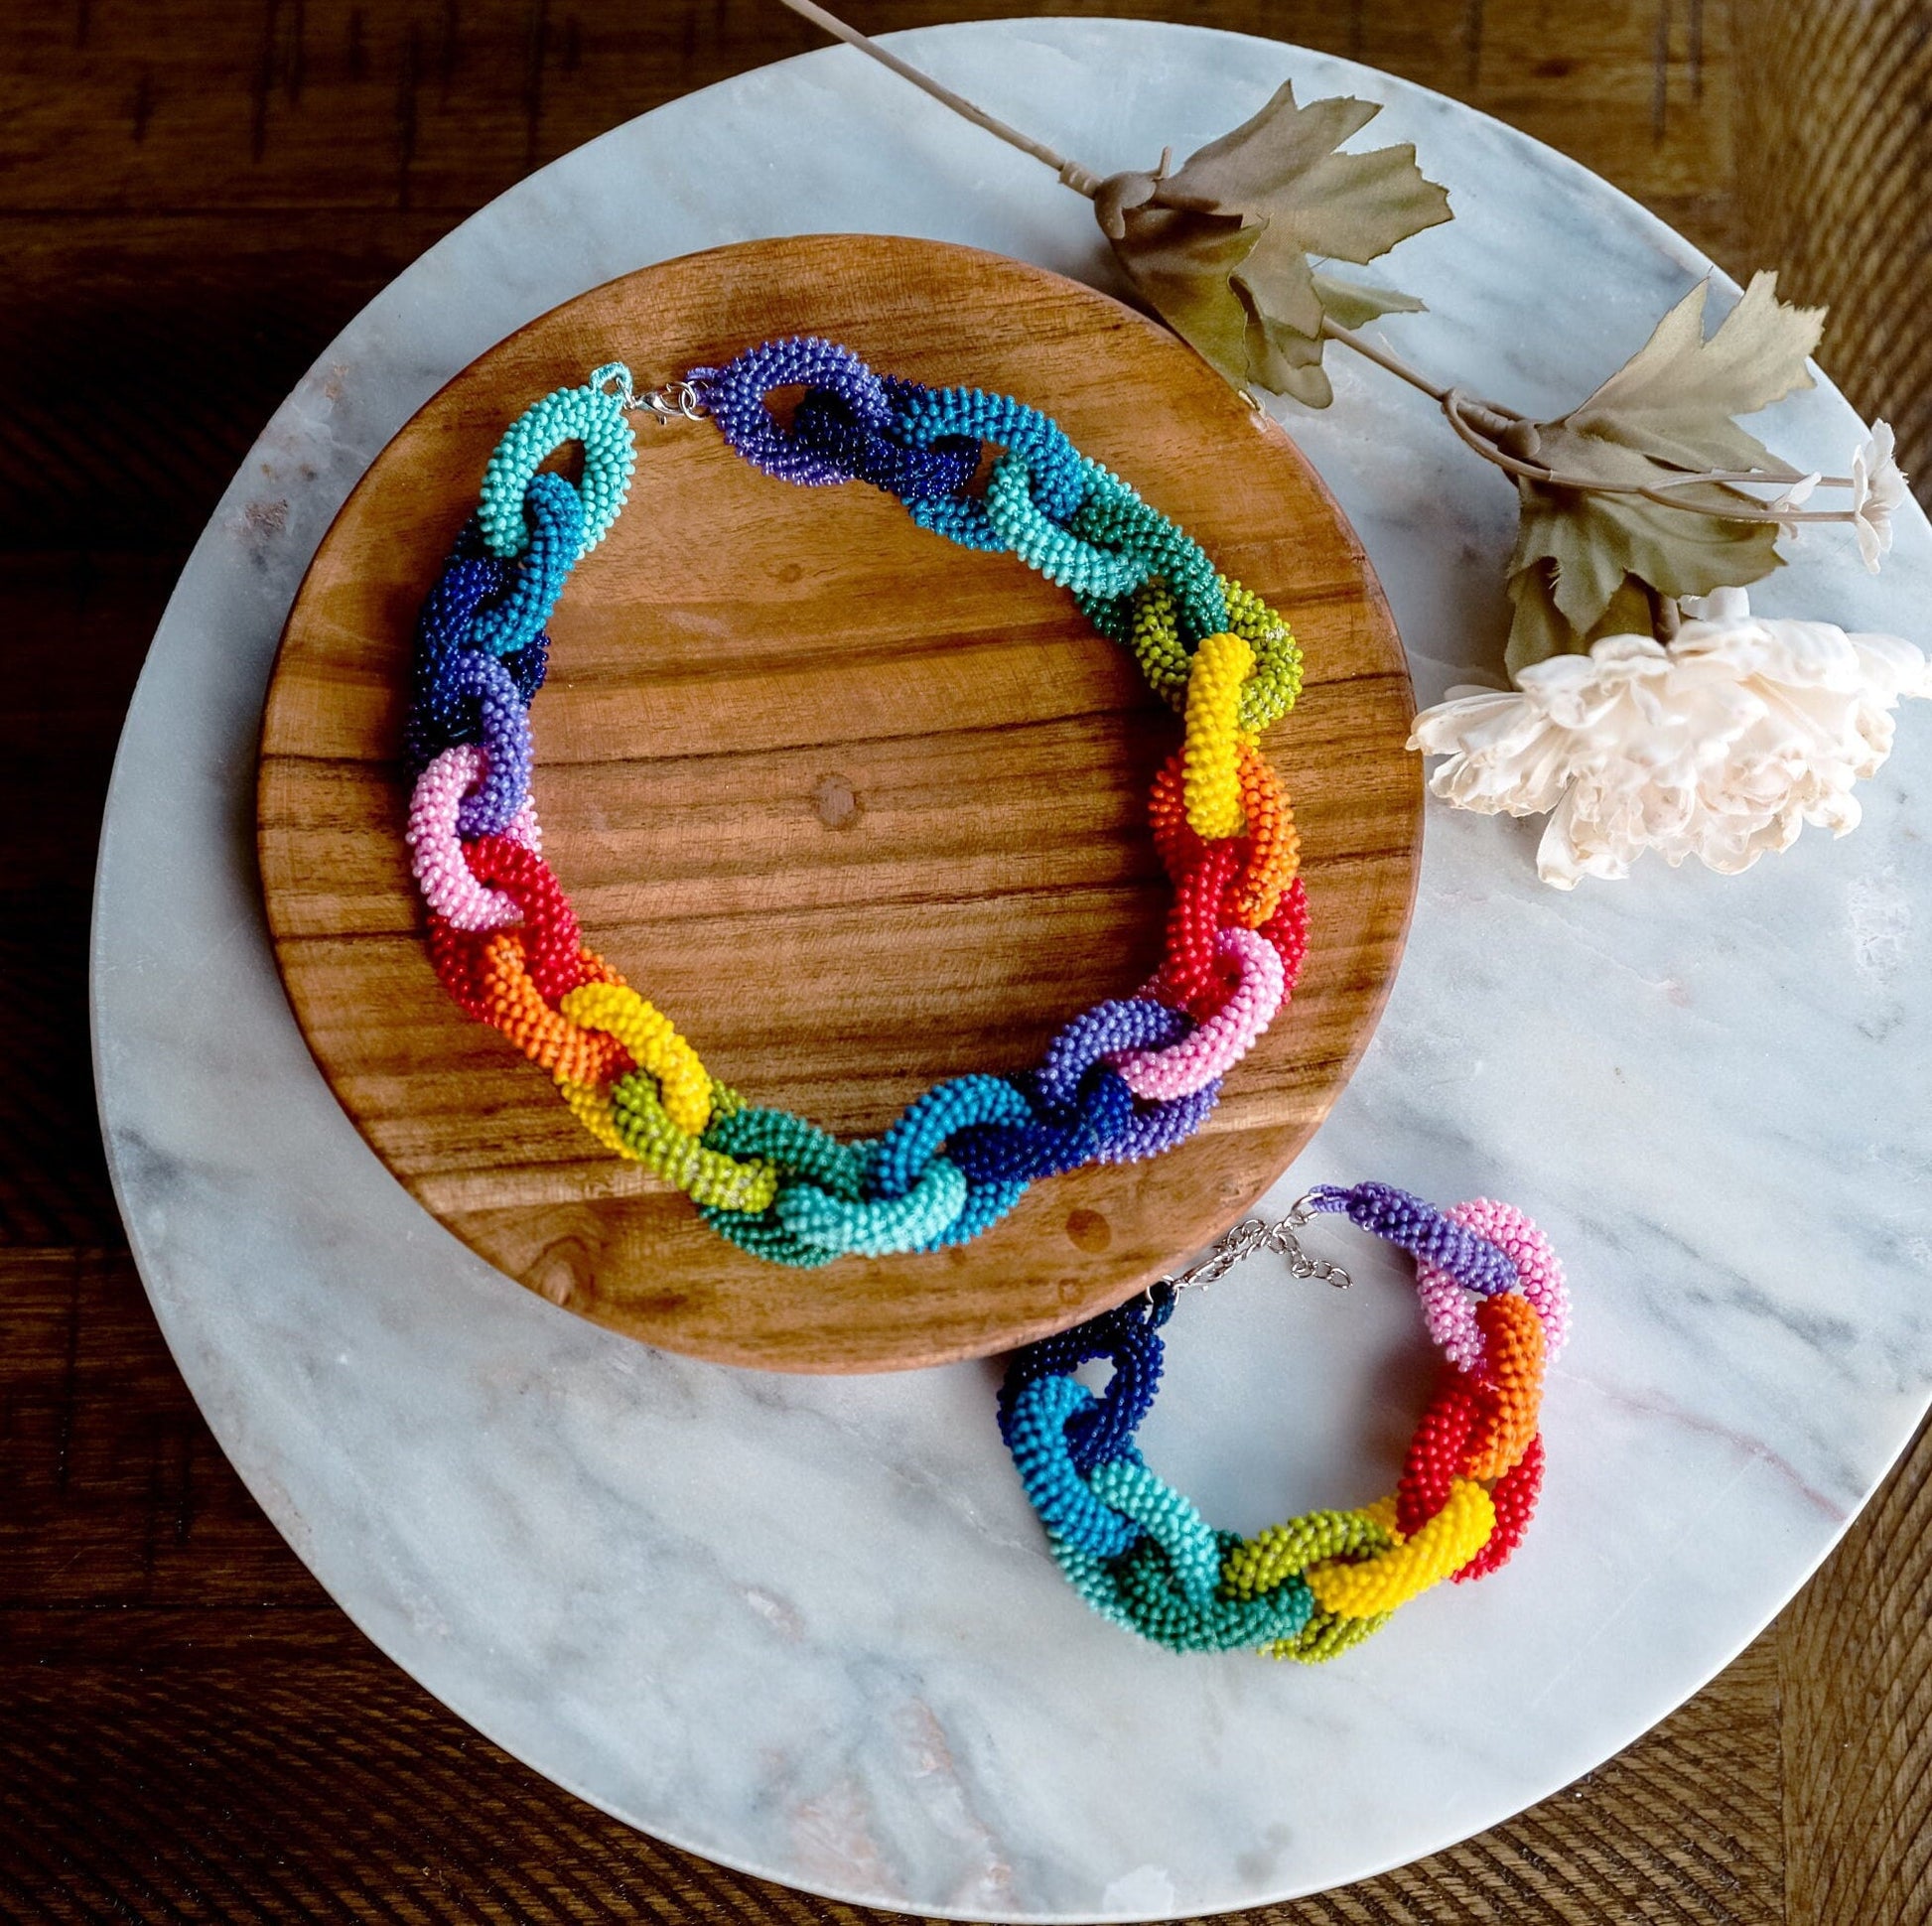 rainbow loom necklace